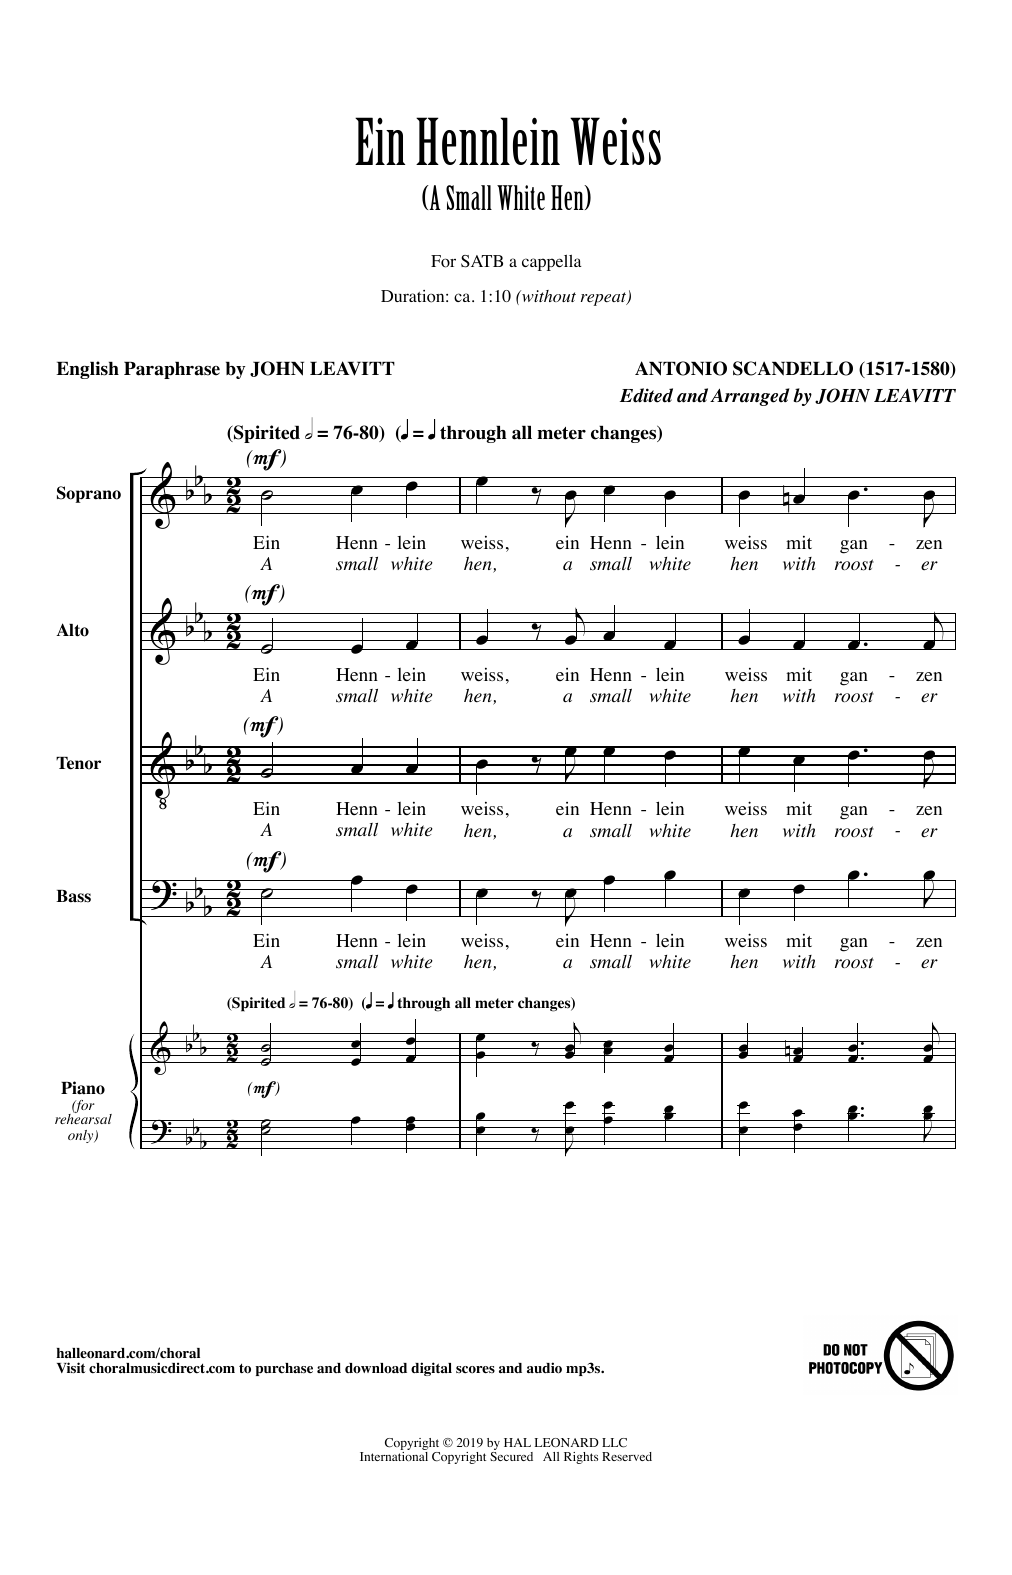 Antonio Scandello Ein Hennlein Weiss (arr. John Leavitt) Sheet Music Notes & Chords for SATB Choir - Download or Print PDF